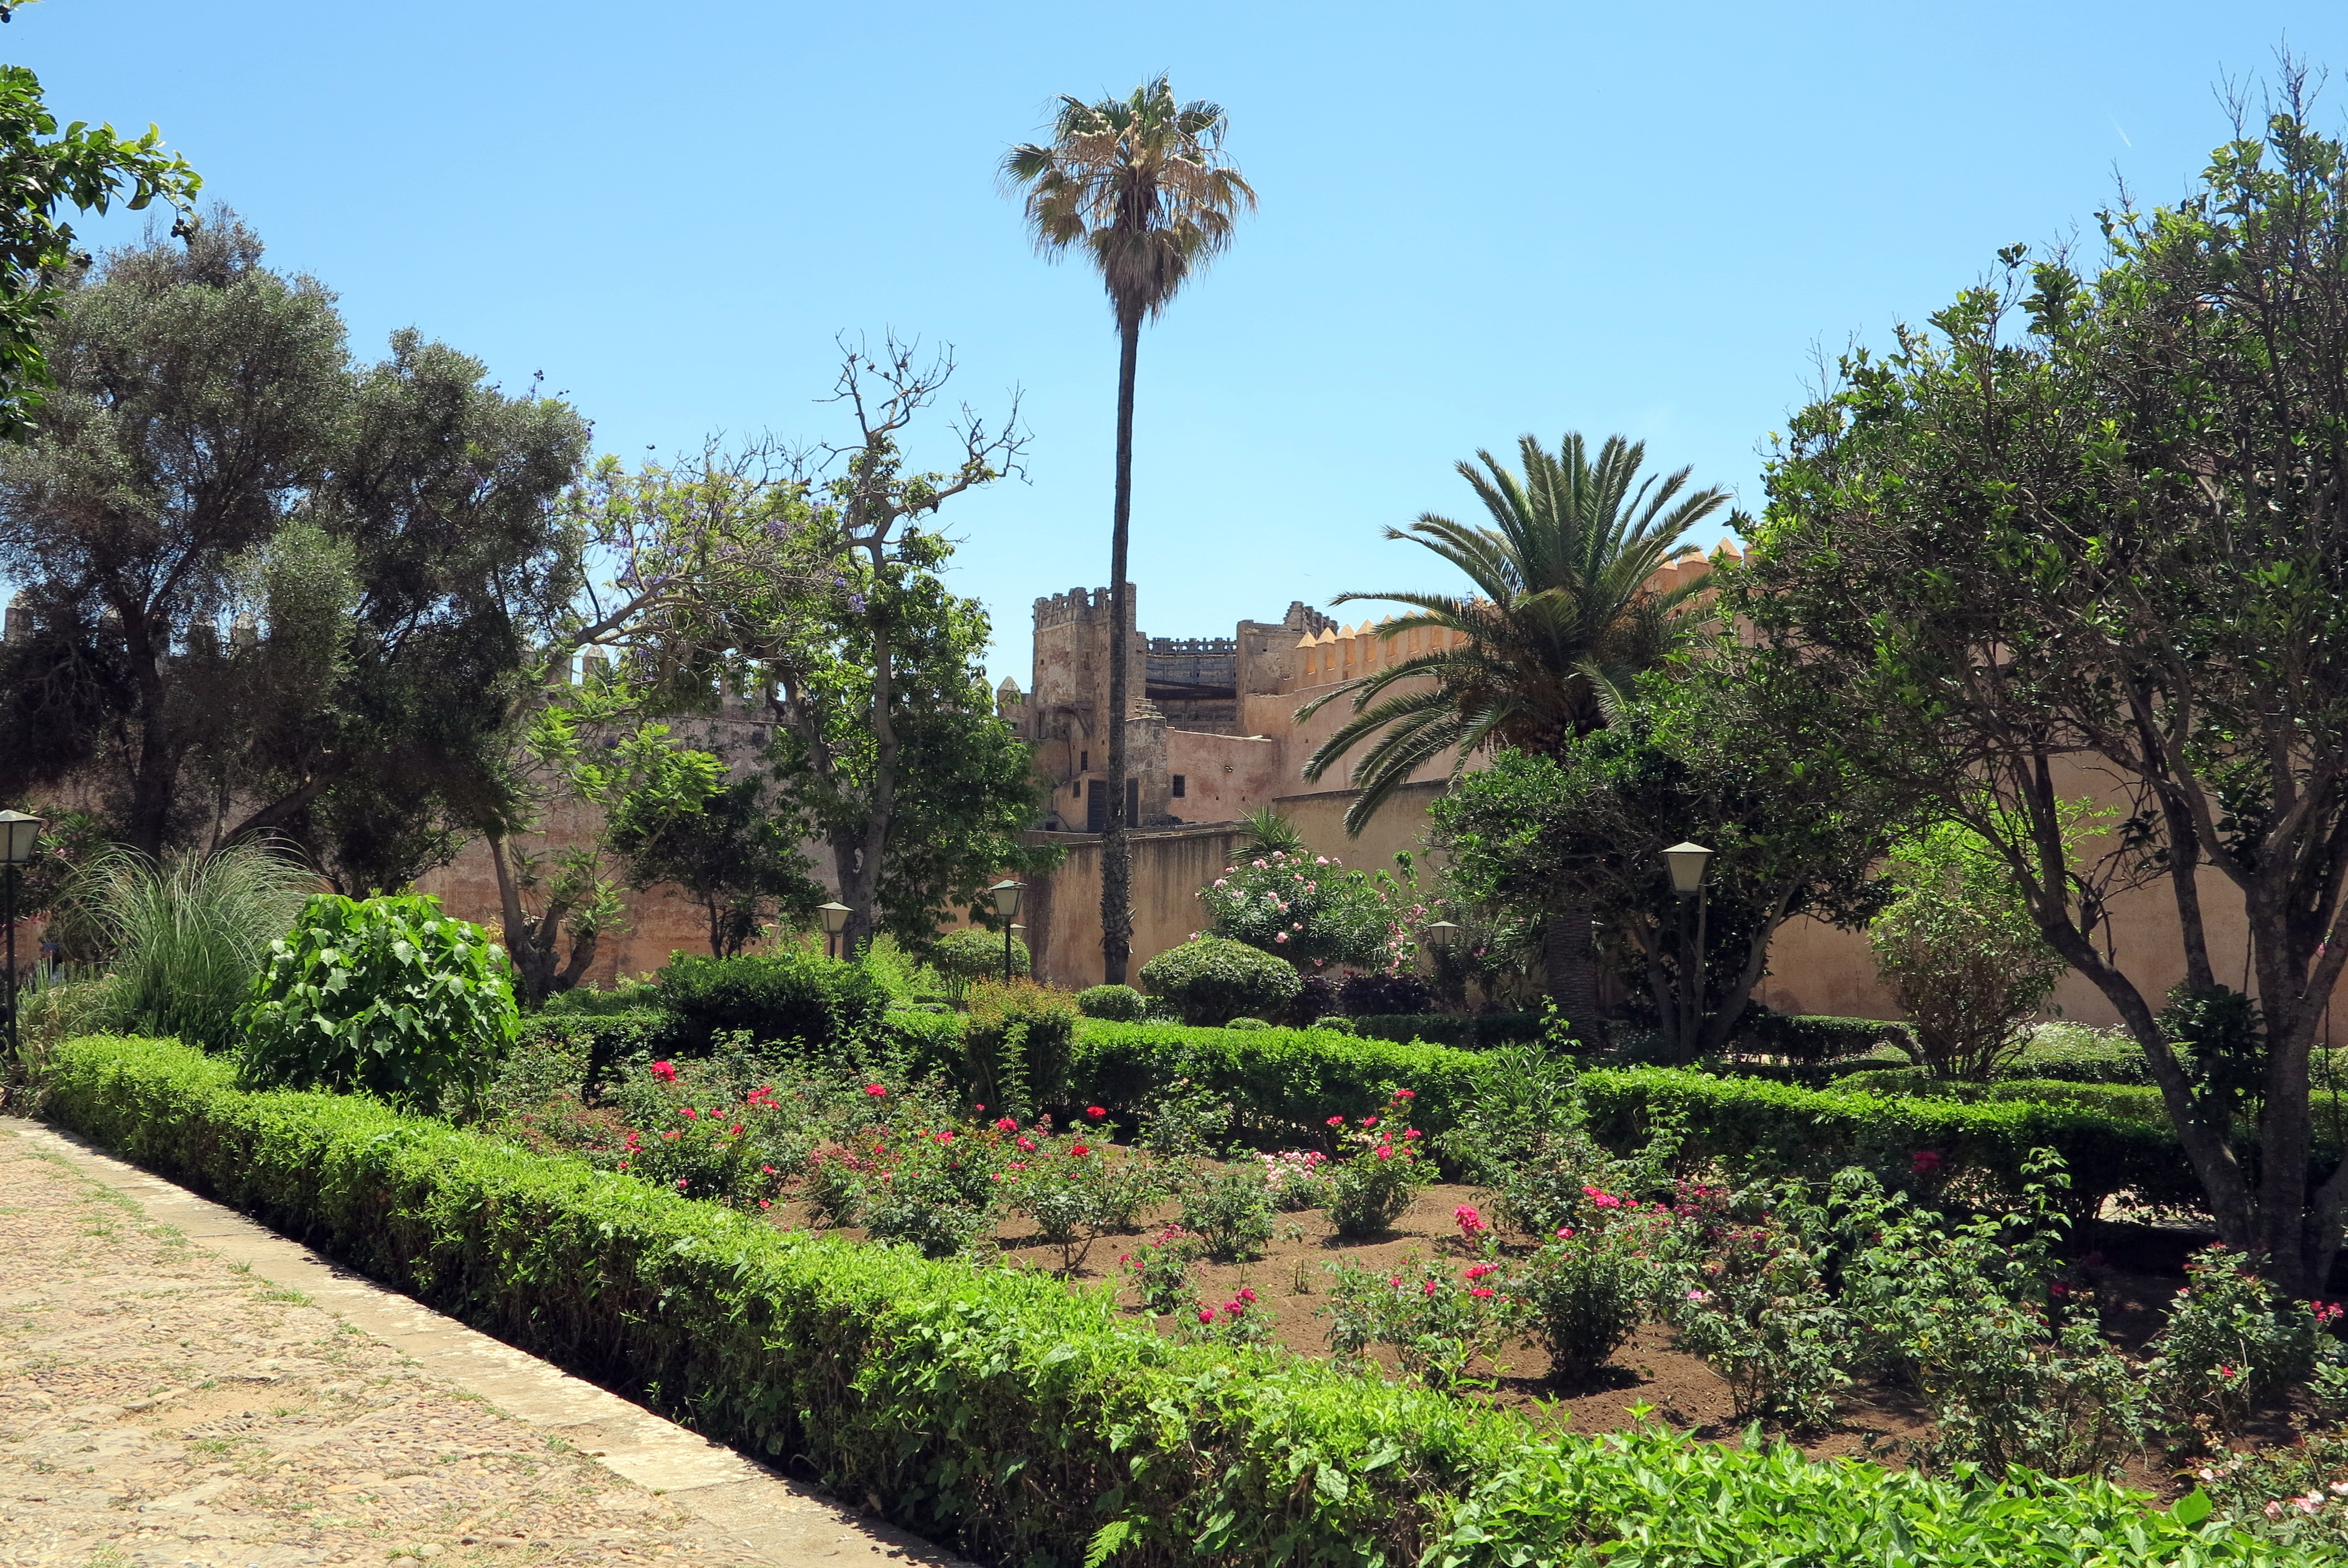 2014.6.3 IMG_4230 Garden in Kasbah, Rabat, Morocco 4221x2819-001